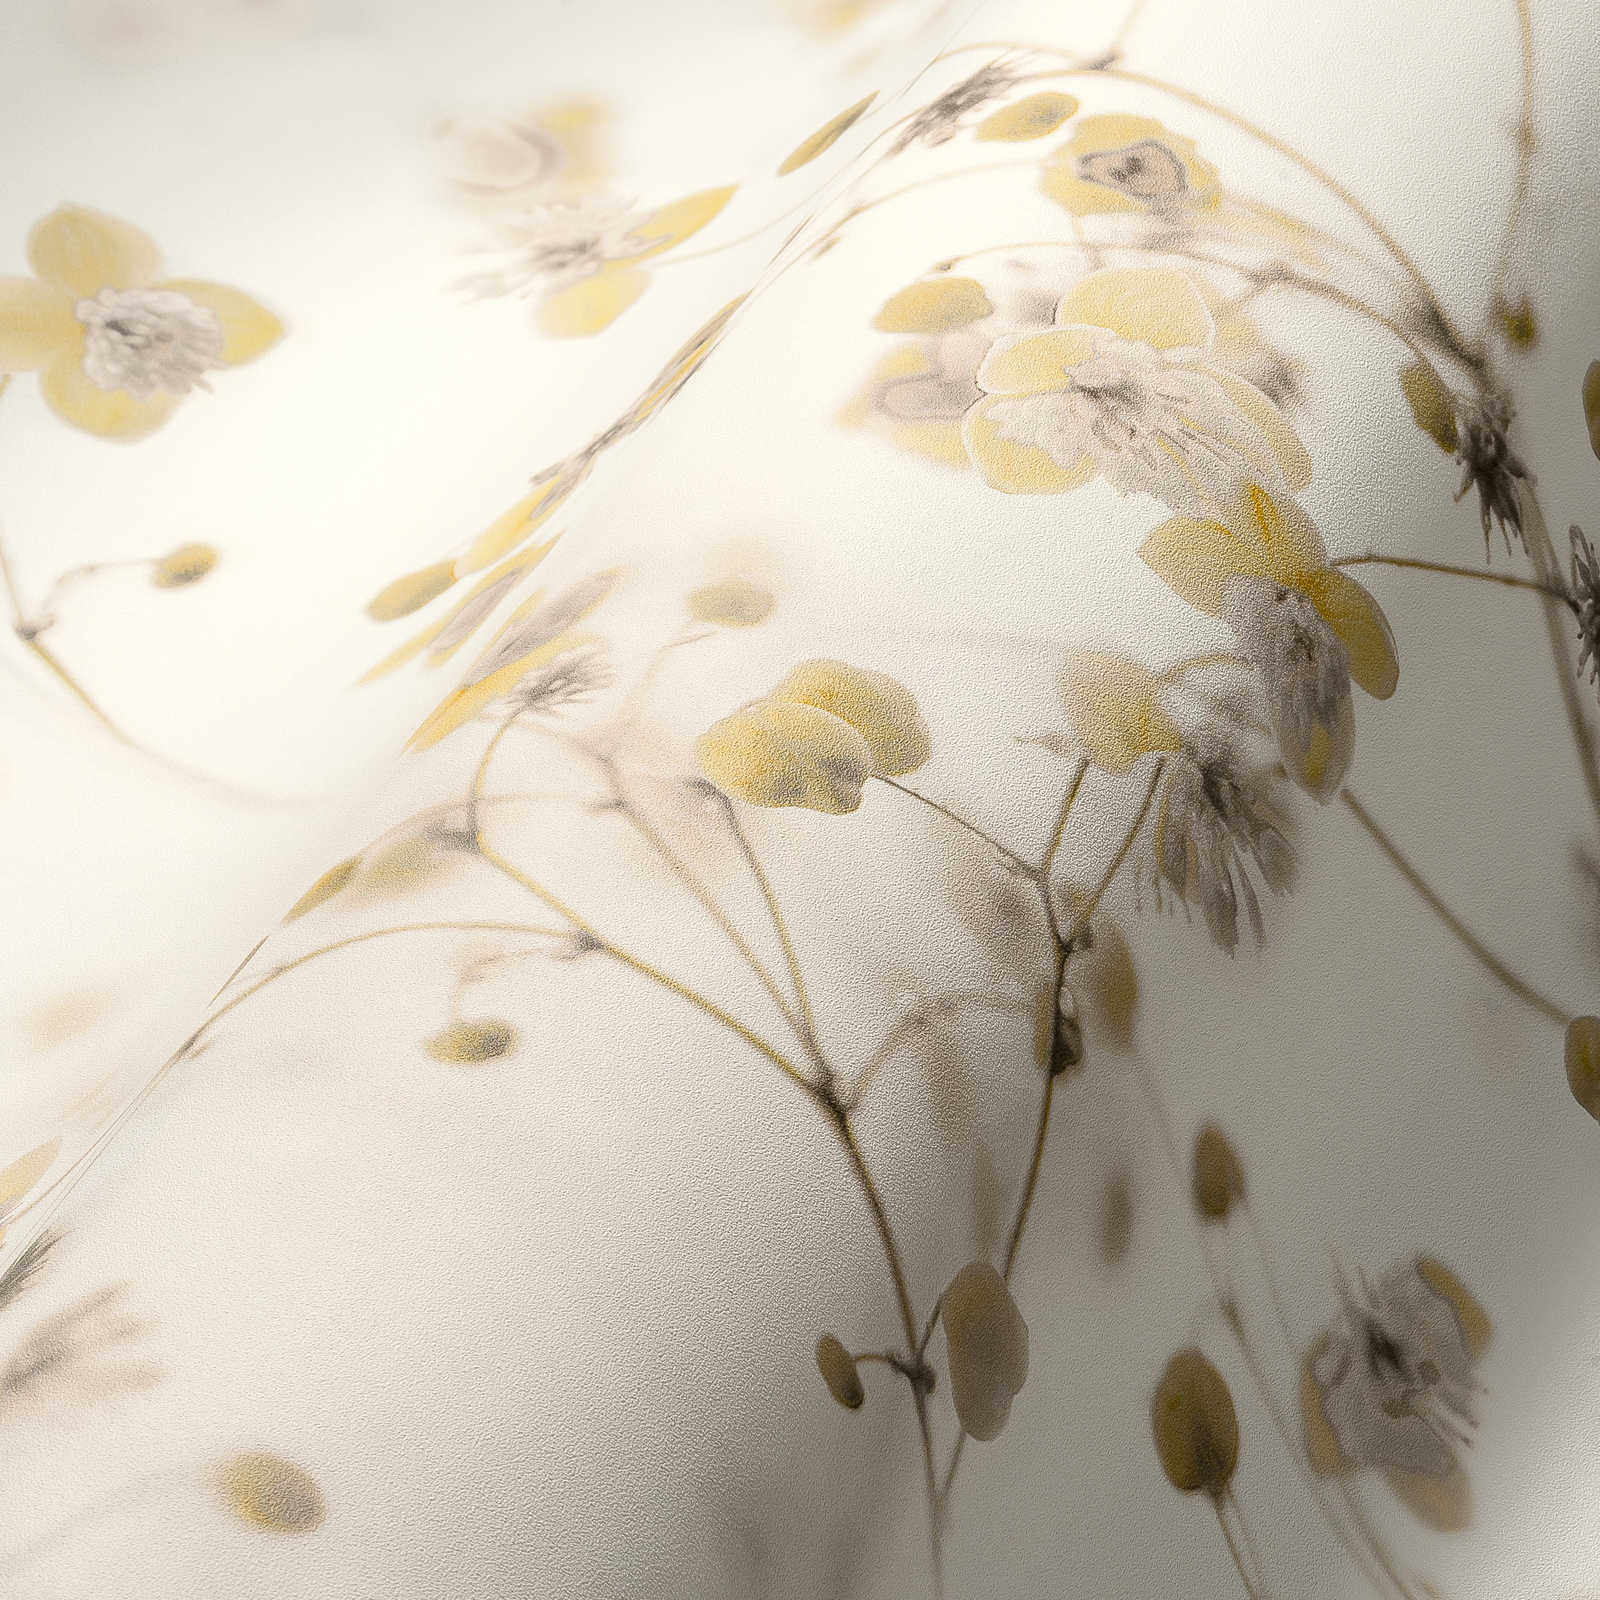             Flowers wallpaper cottage core design - cream, yellow
        